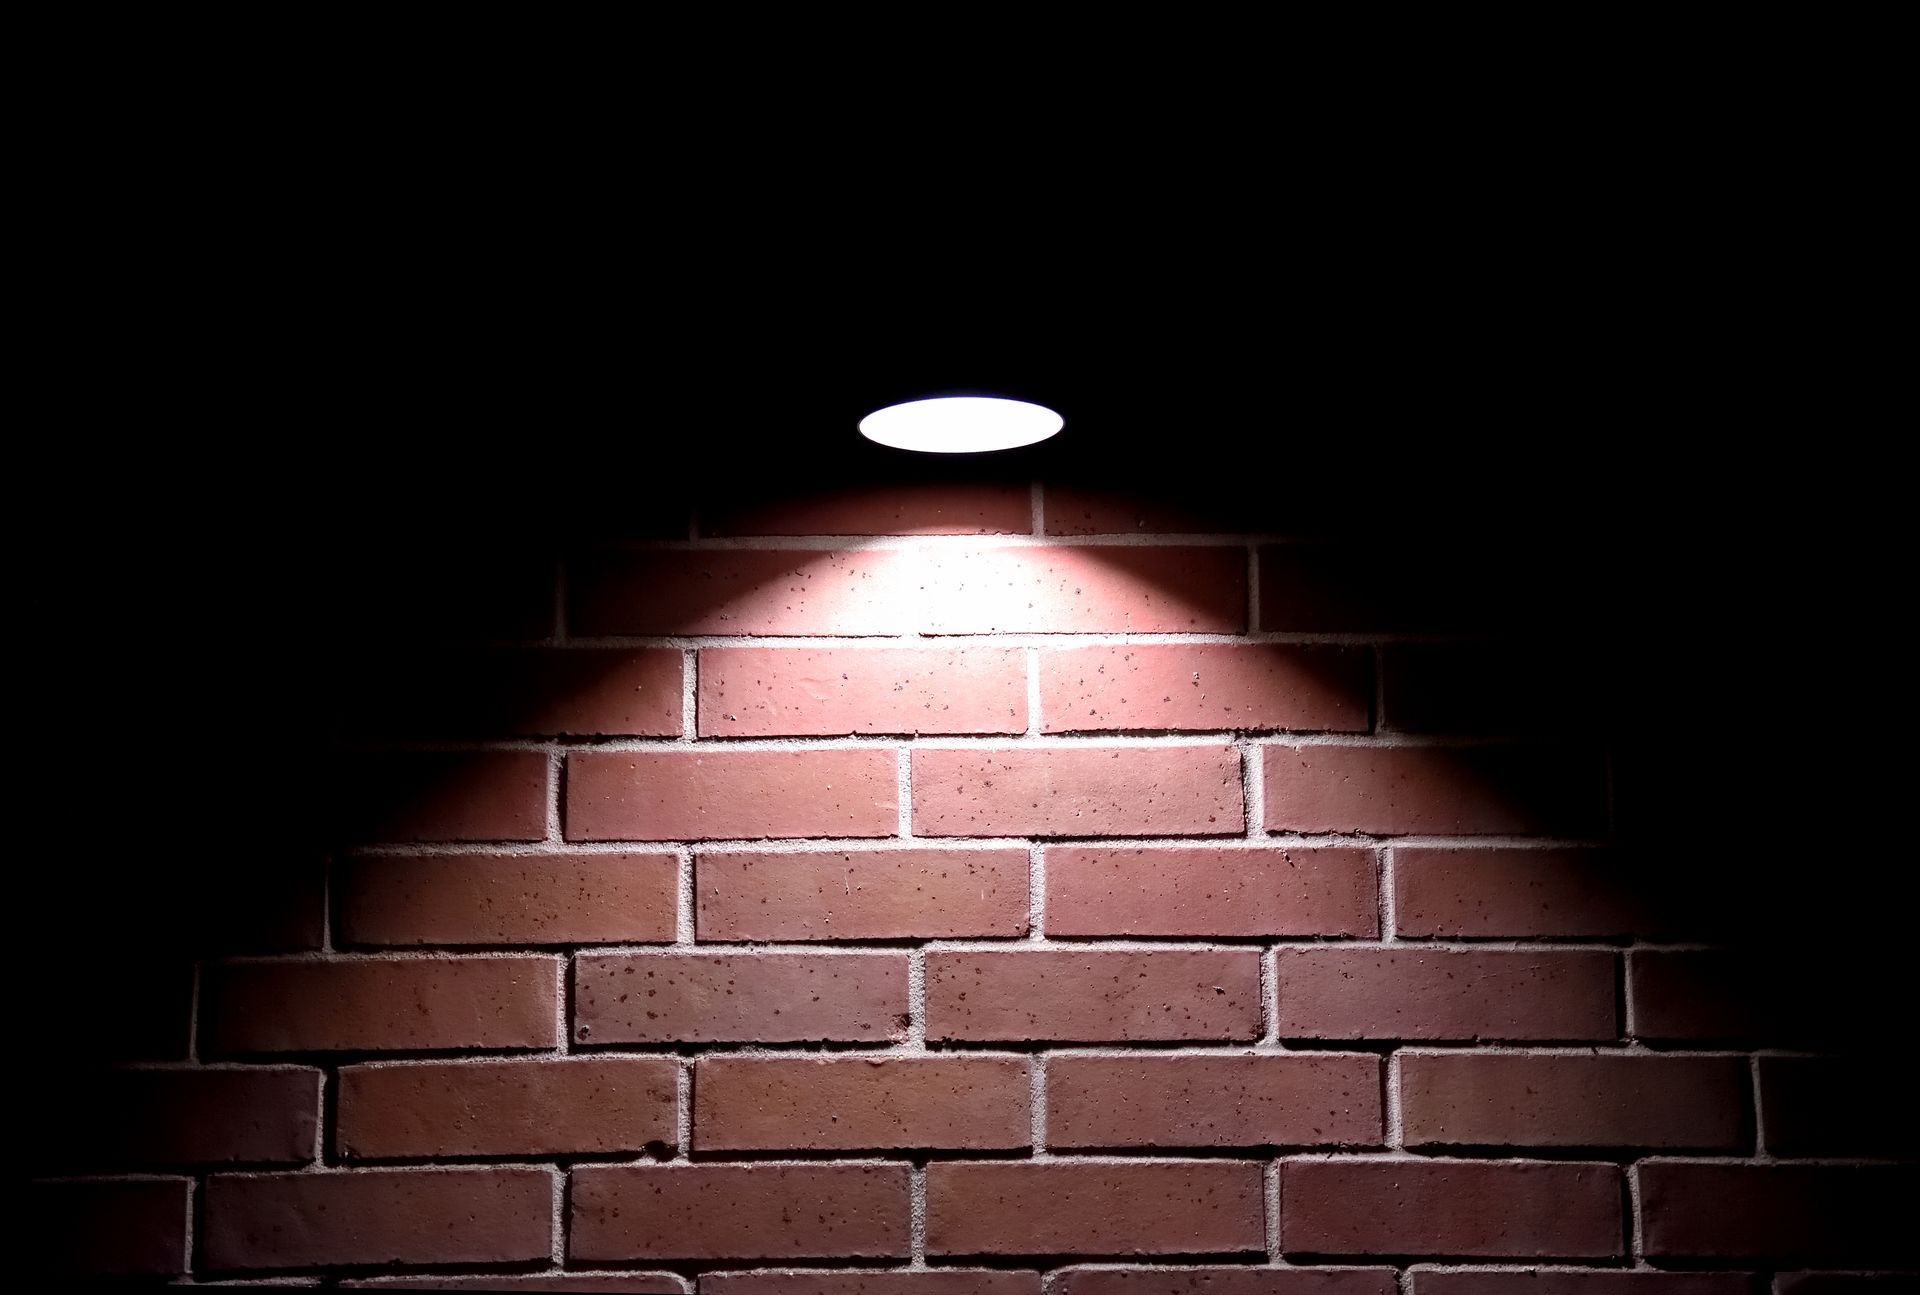 Light shining on brick wall at night